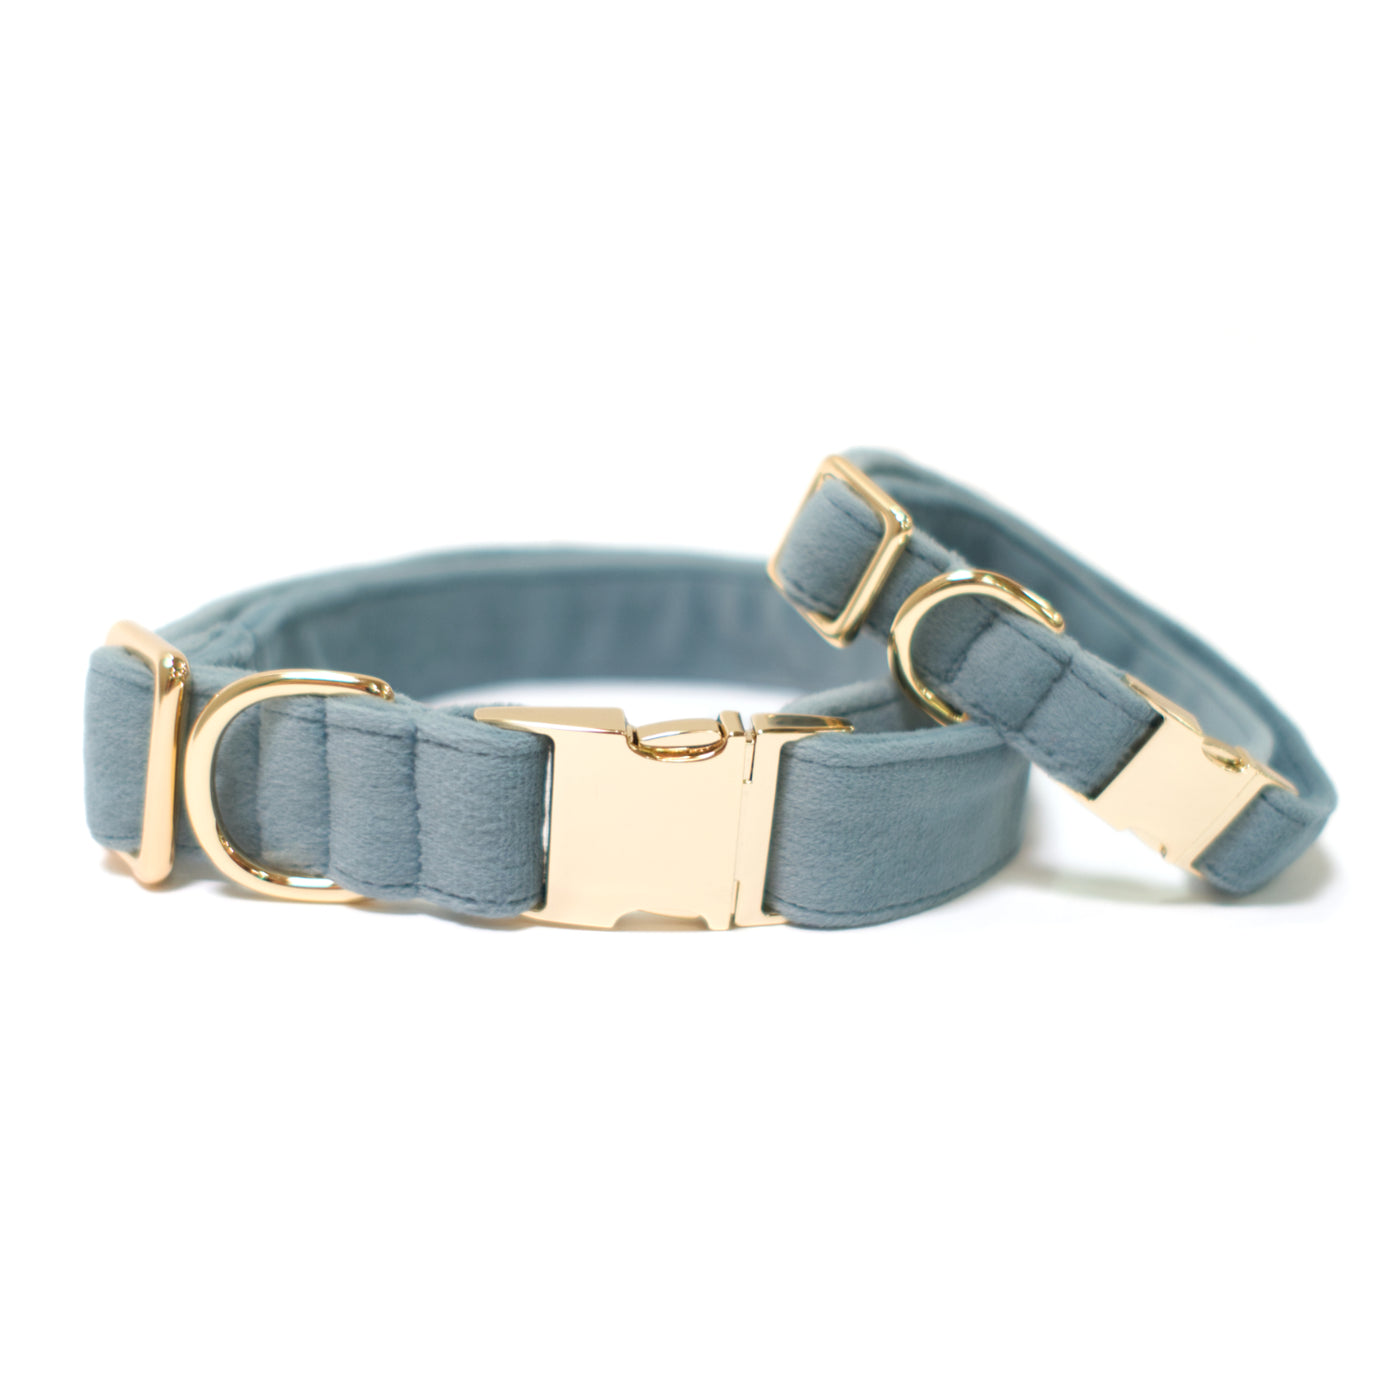 Cornflower blue velvet dog collar with gold hardware shown in two sizes.